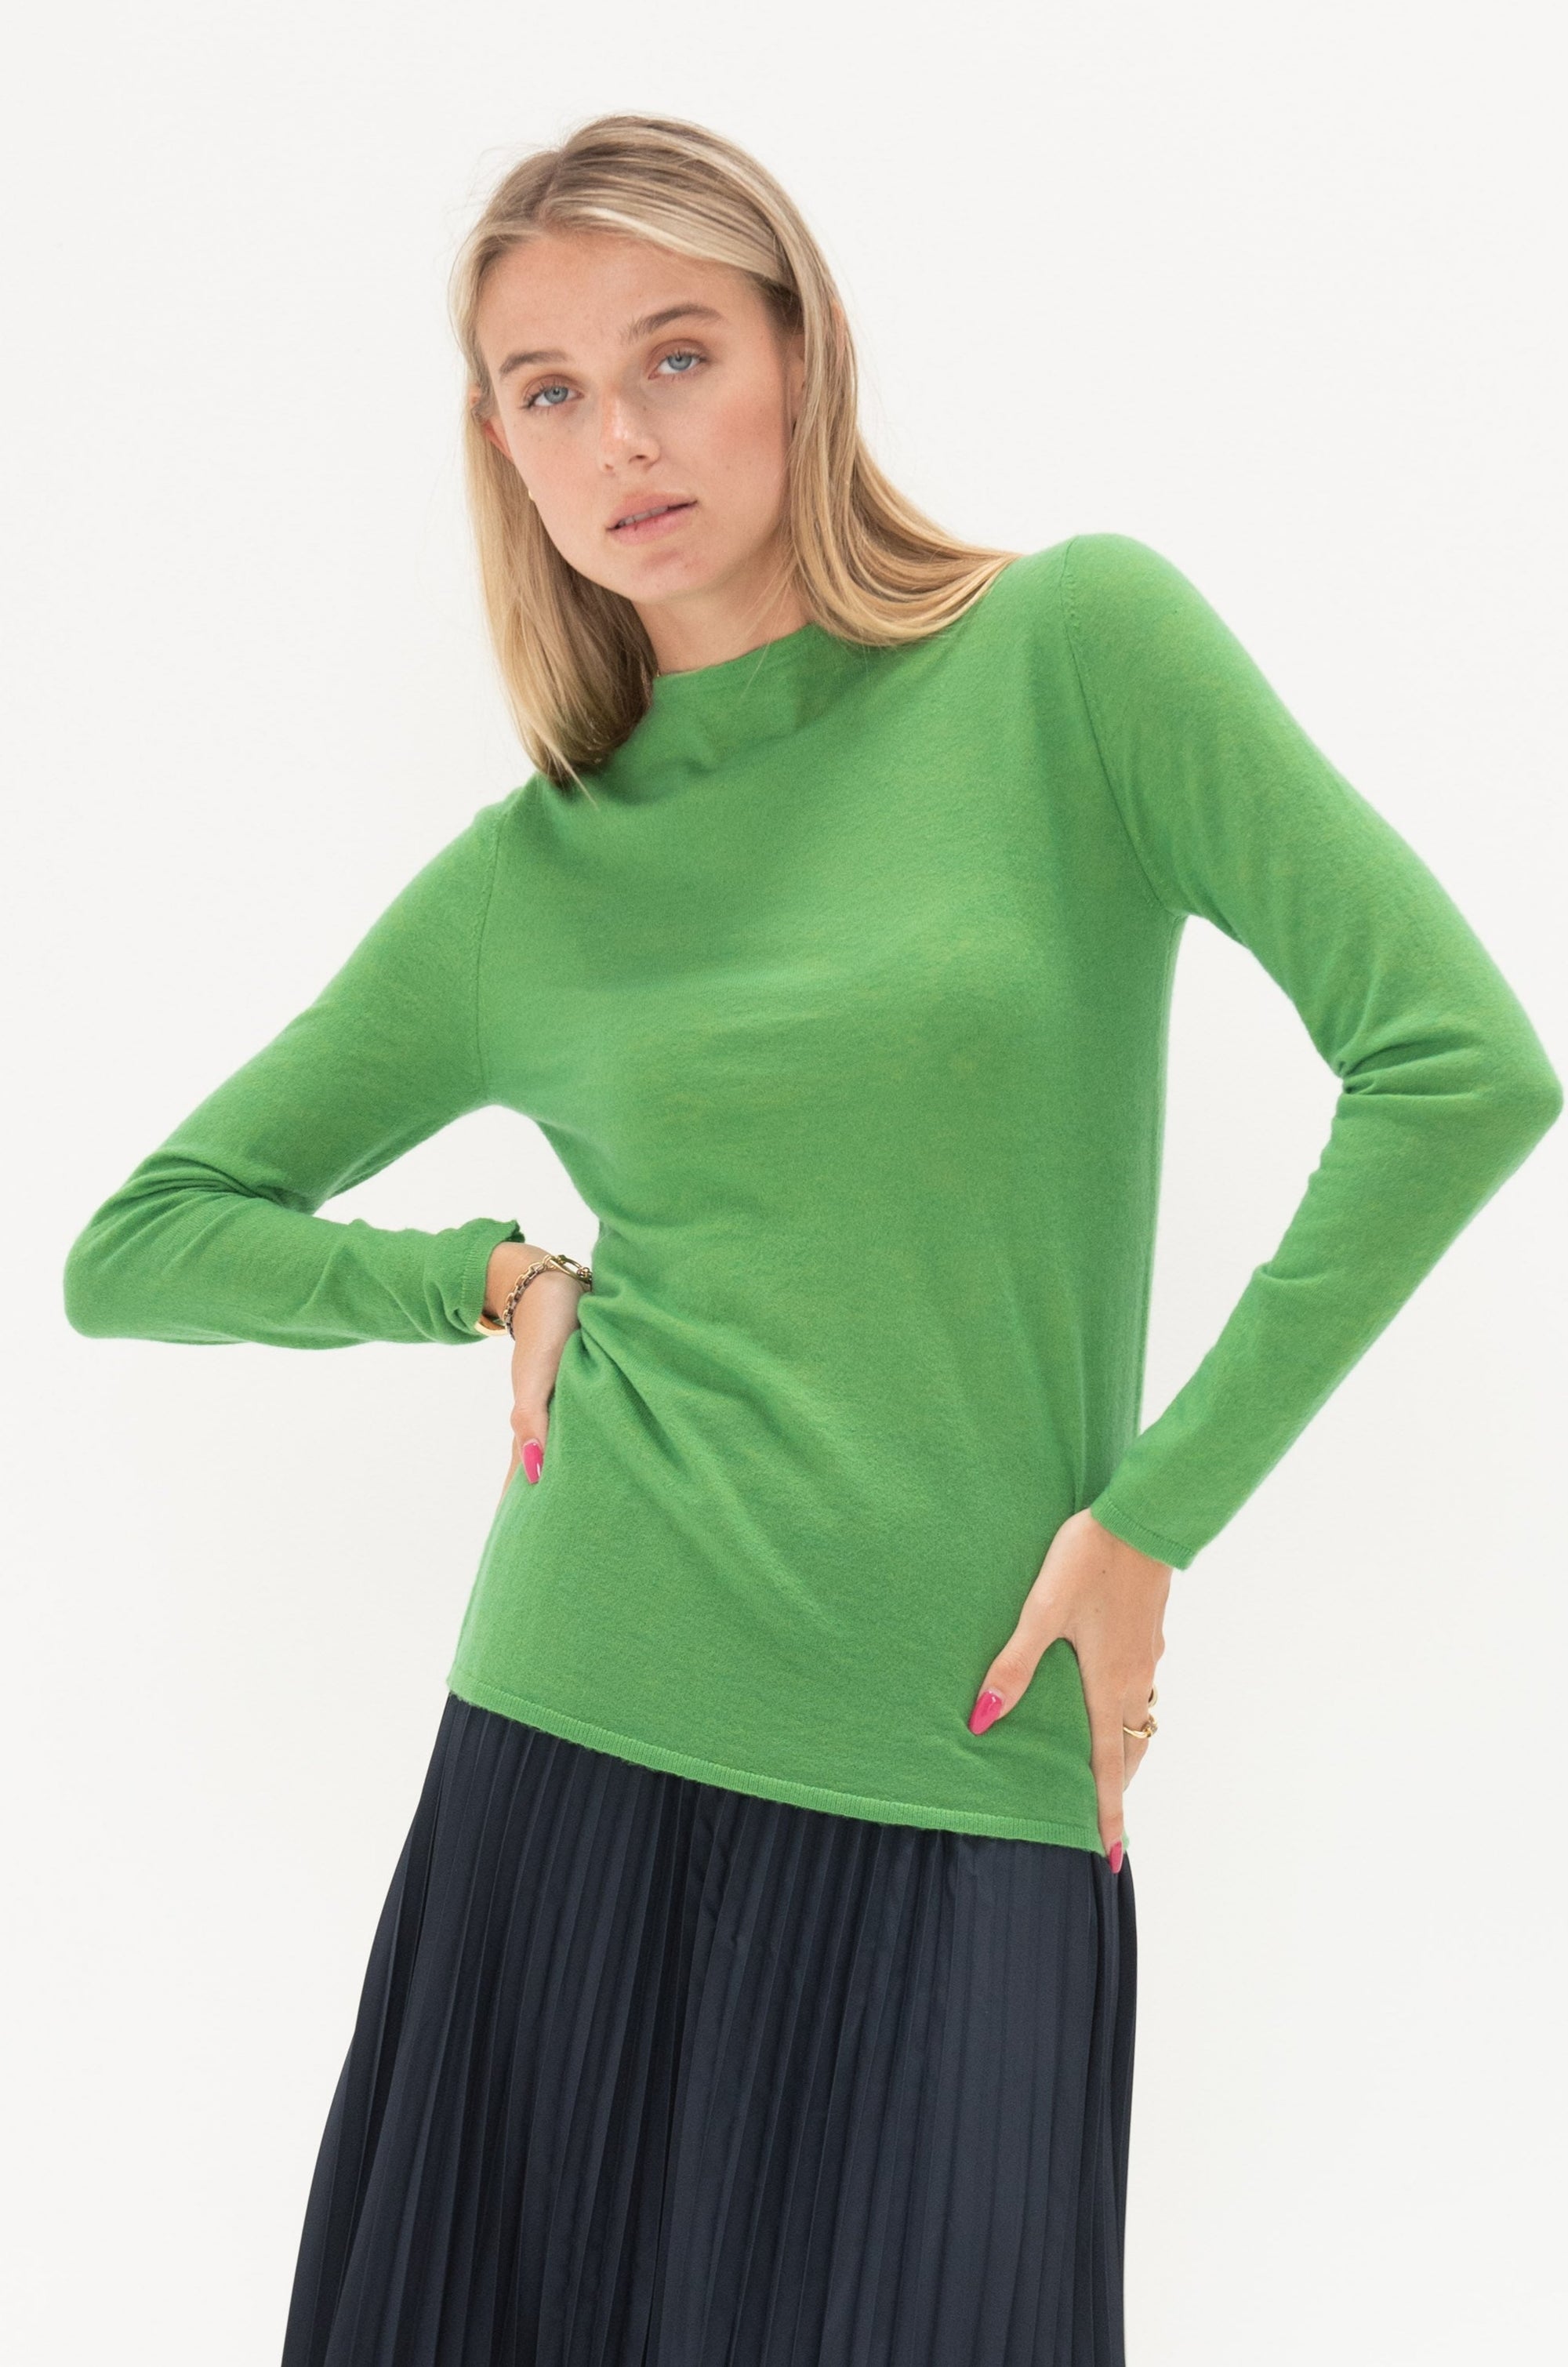 TIBI - Skinlike Mercerized Wool Soft Sheer Pullover, Green